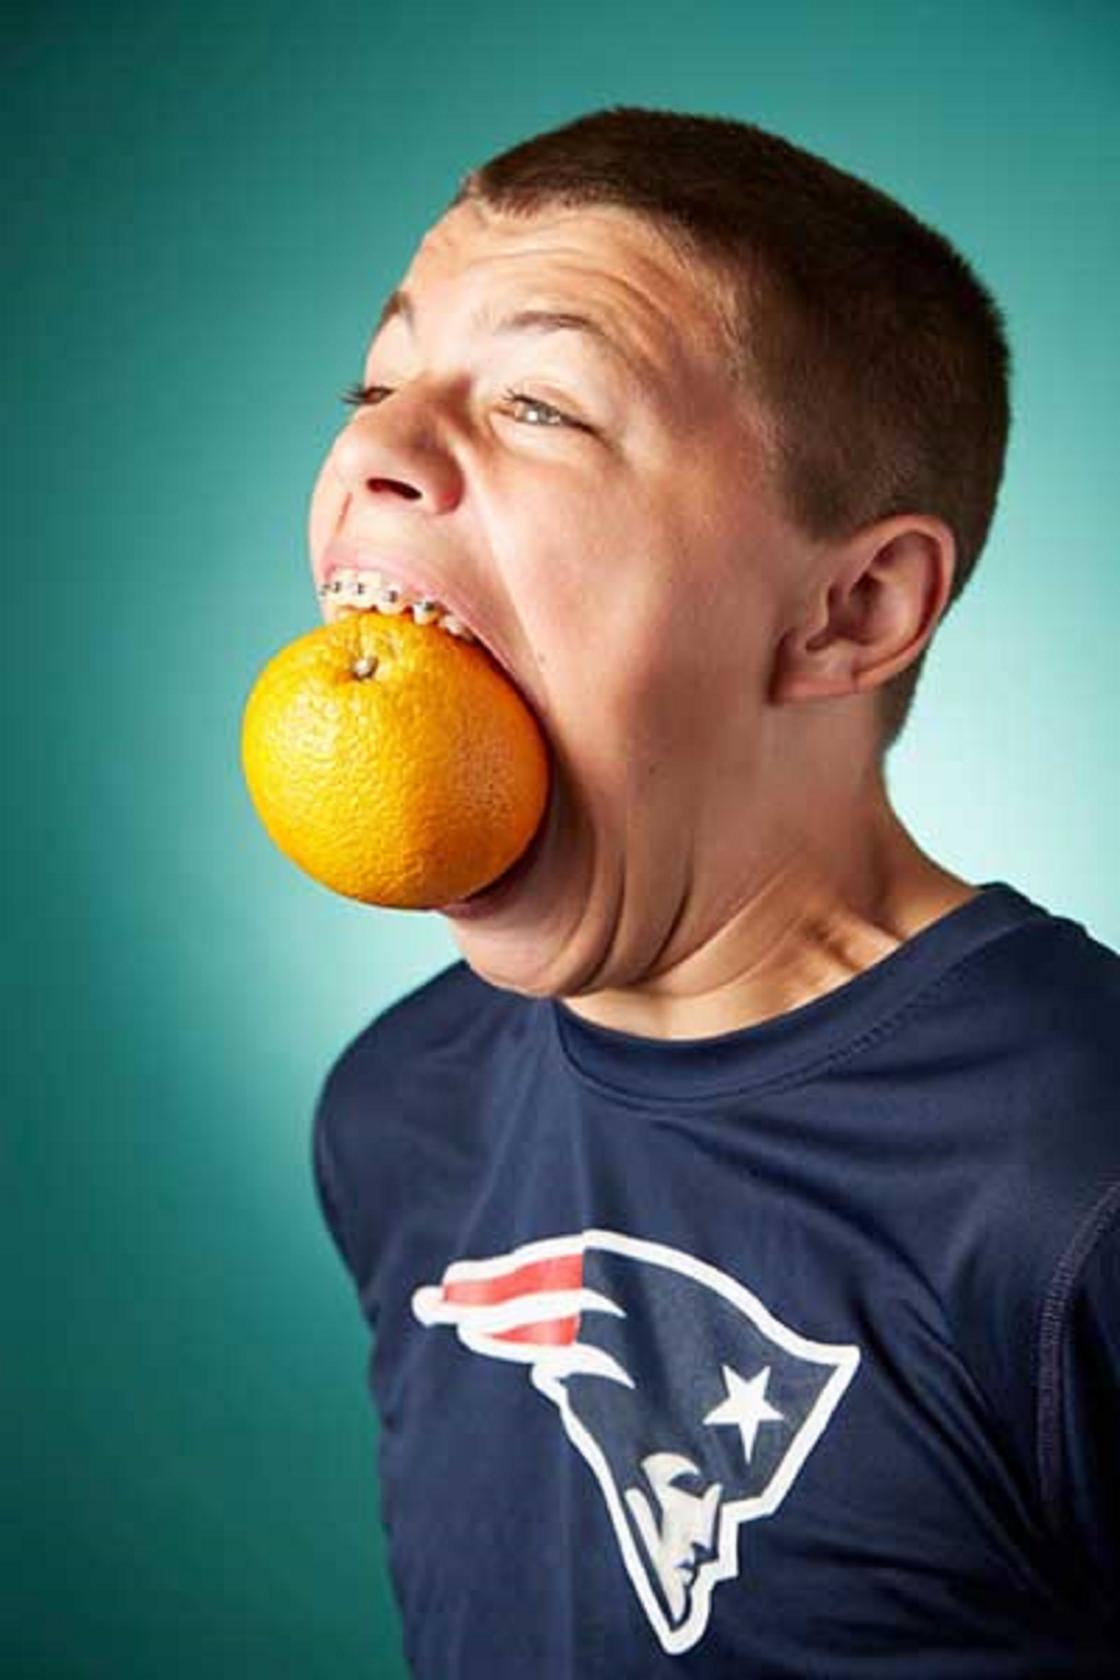 Апельсин во рту мужчины